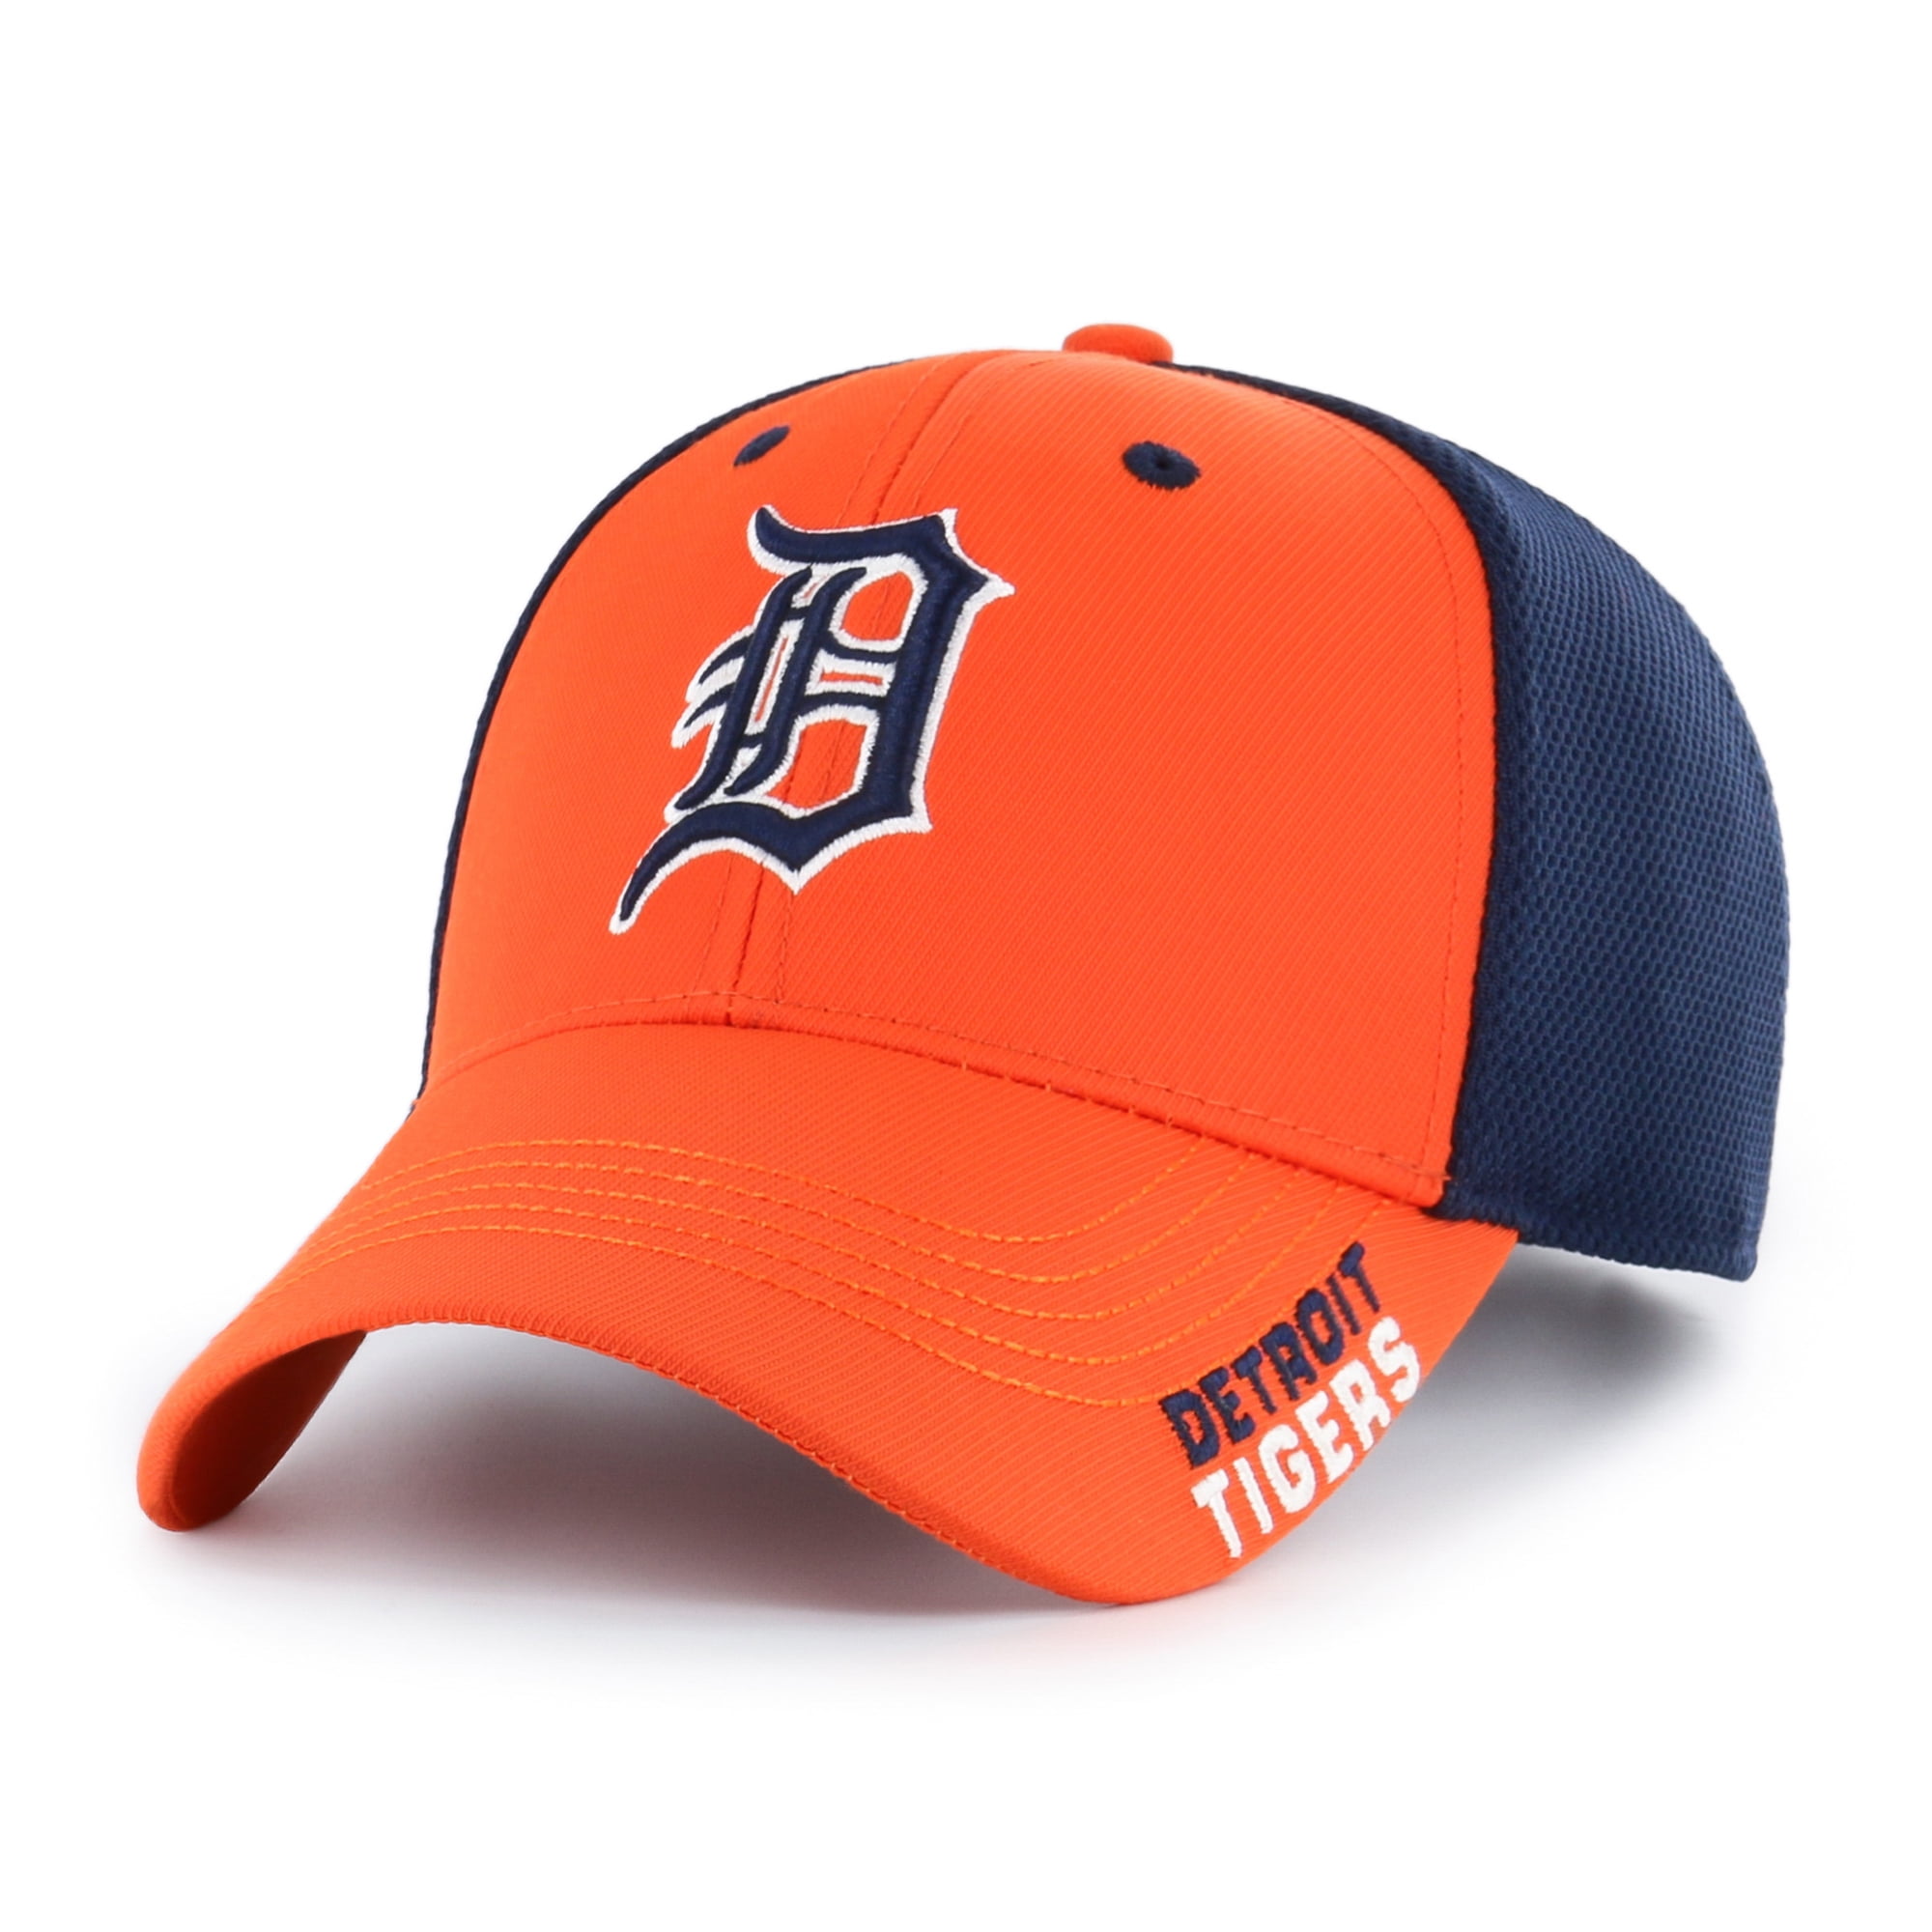 MLB Detroit Tigers Completion Adjustable Cap/Hat by Fan Favorite 